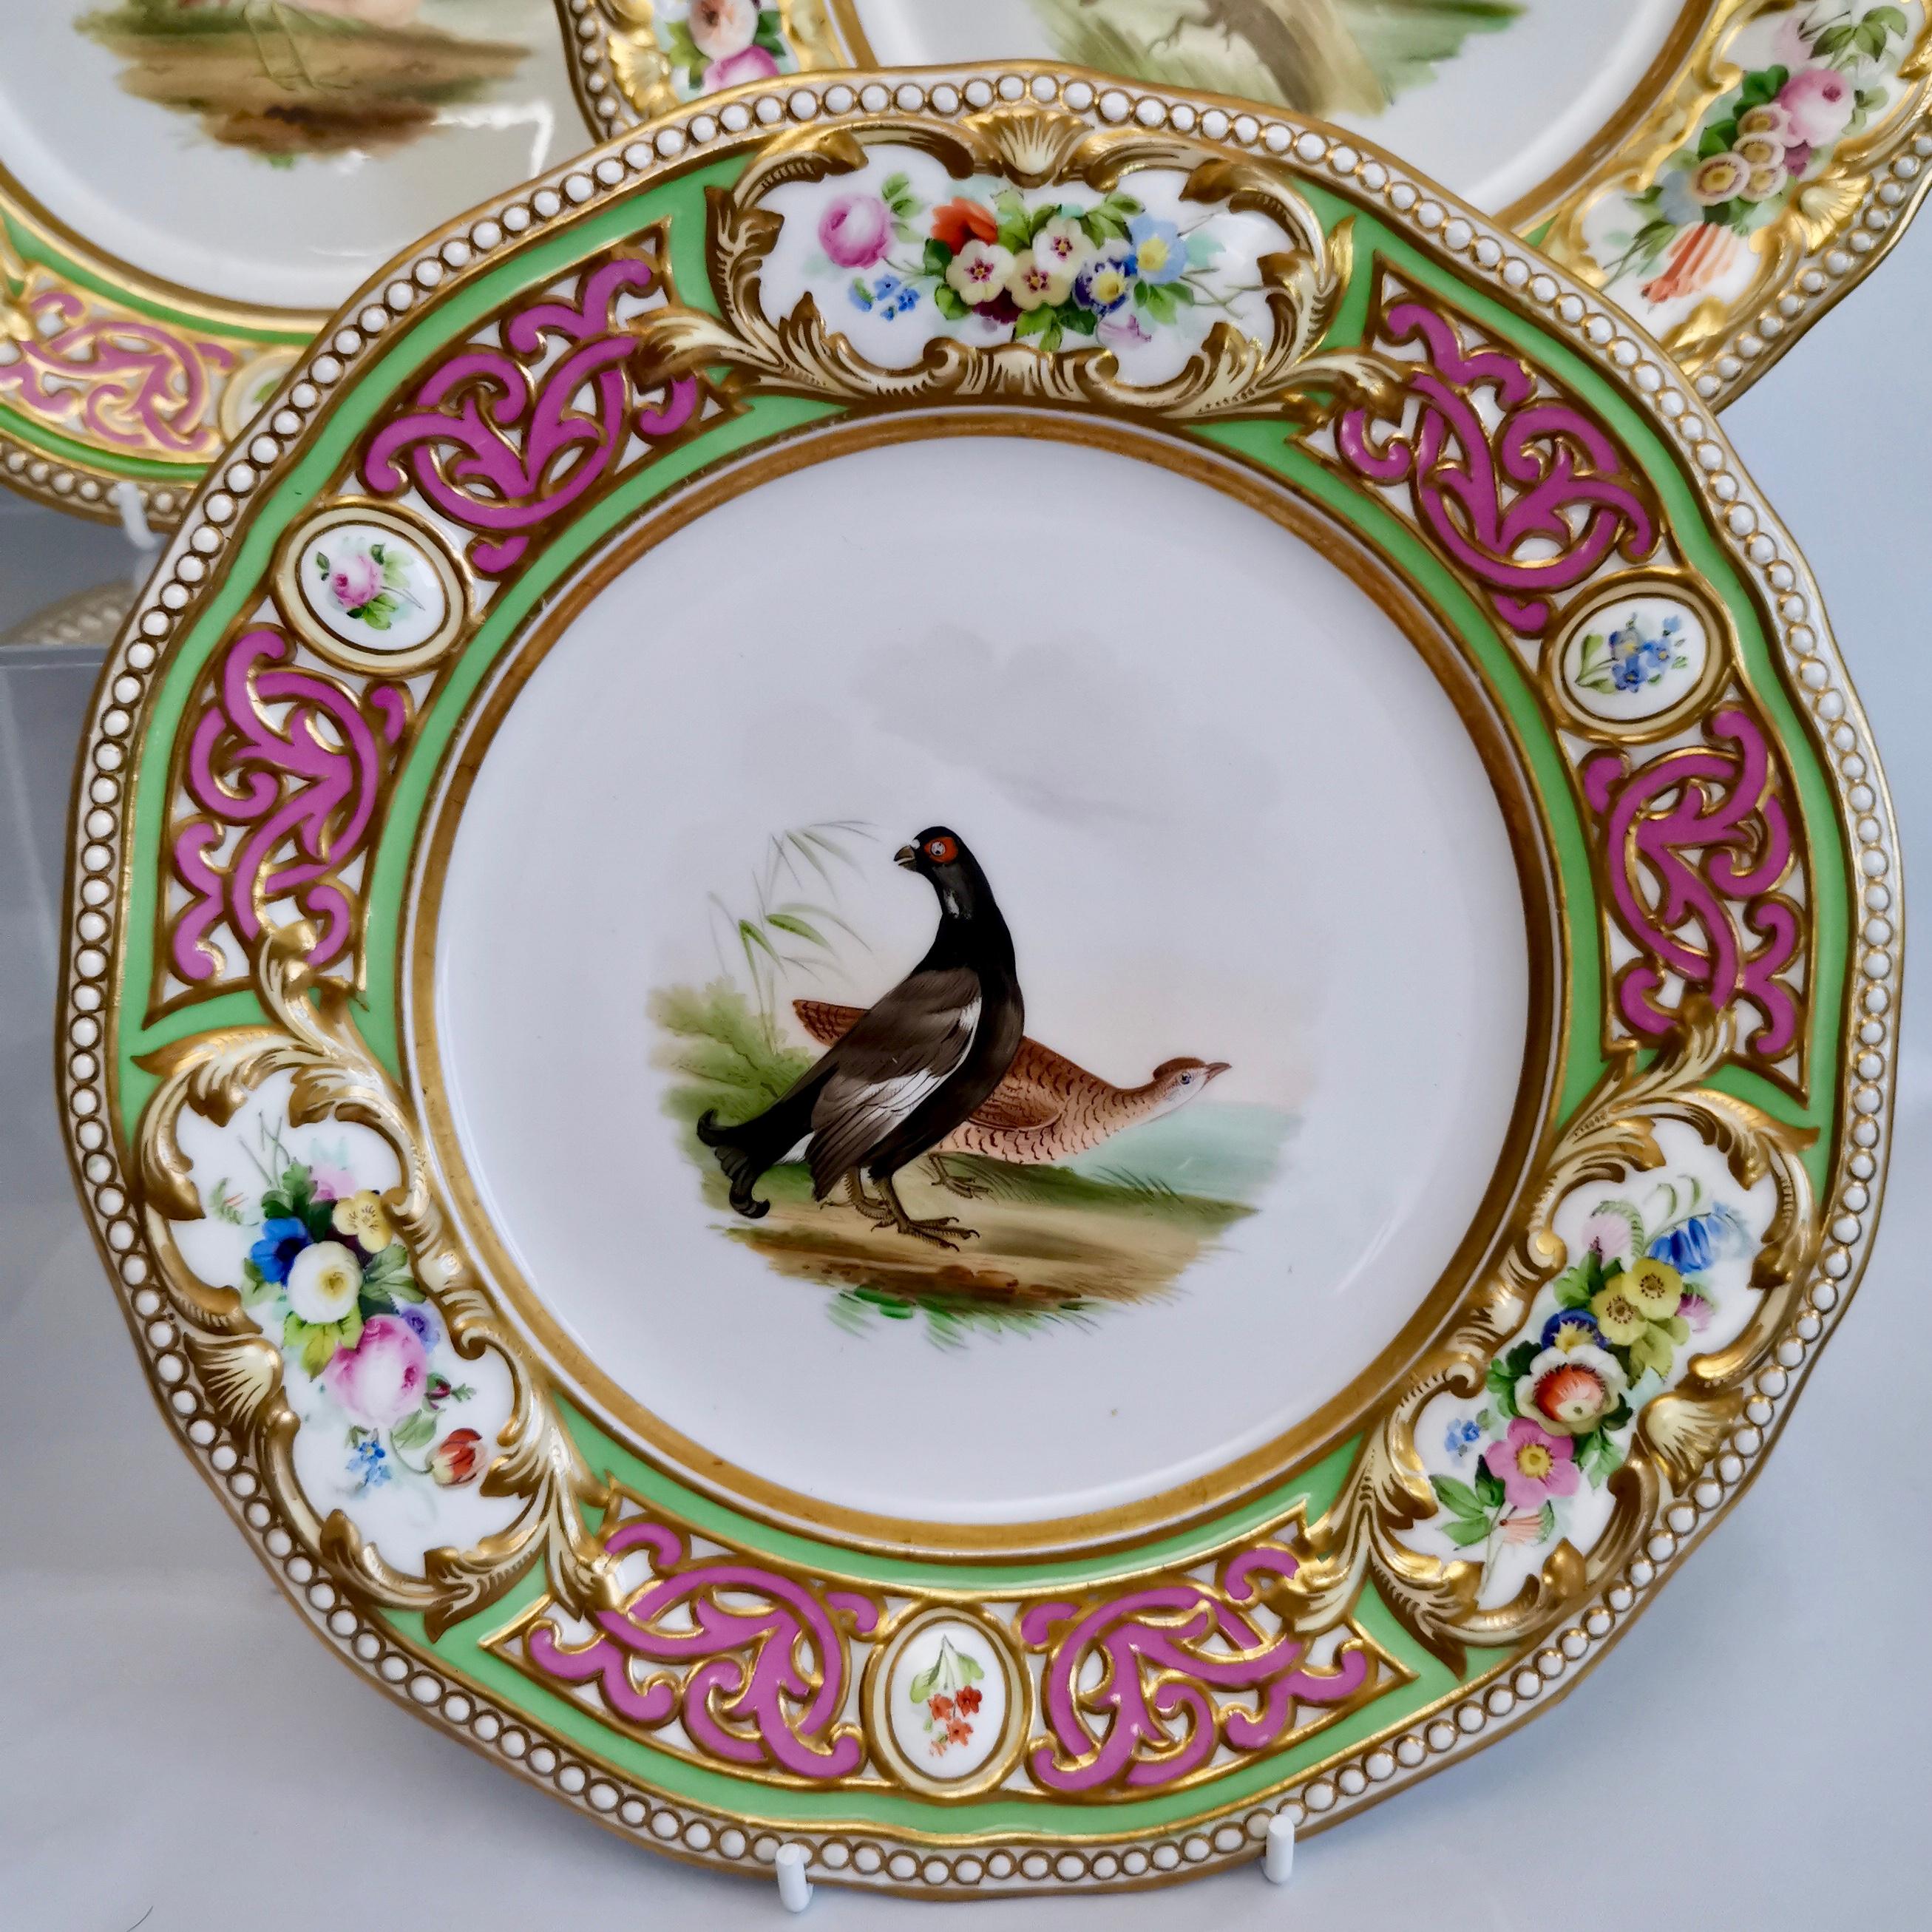 Grainger Worcester Porcelain Dessert Service, Persian Revival with Birds, 1855 7